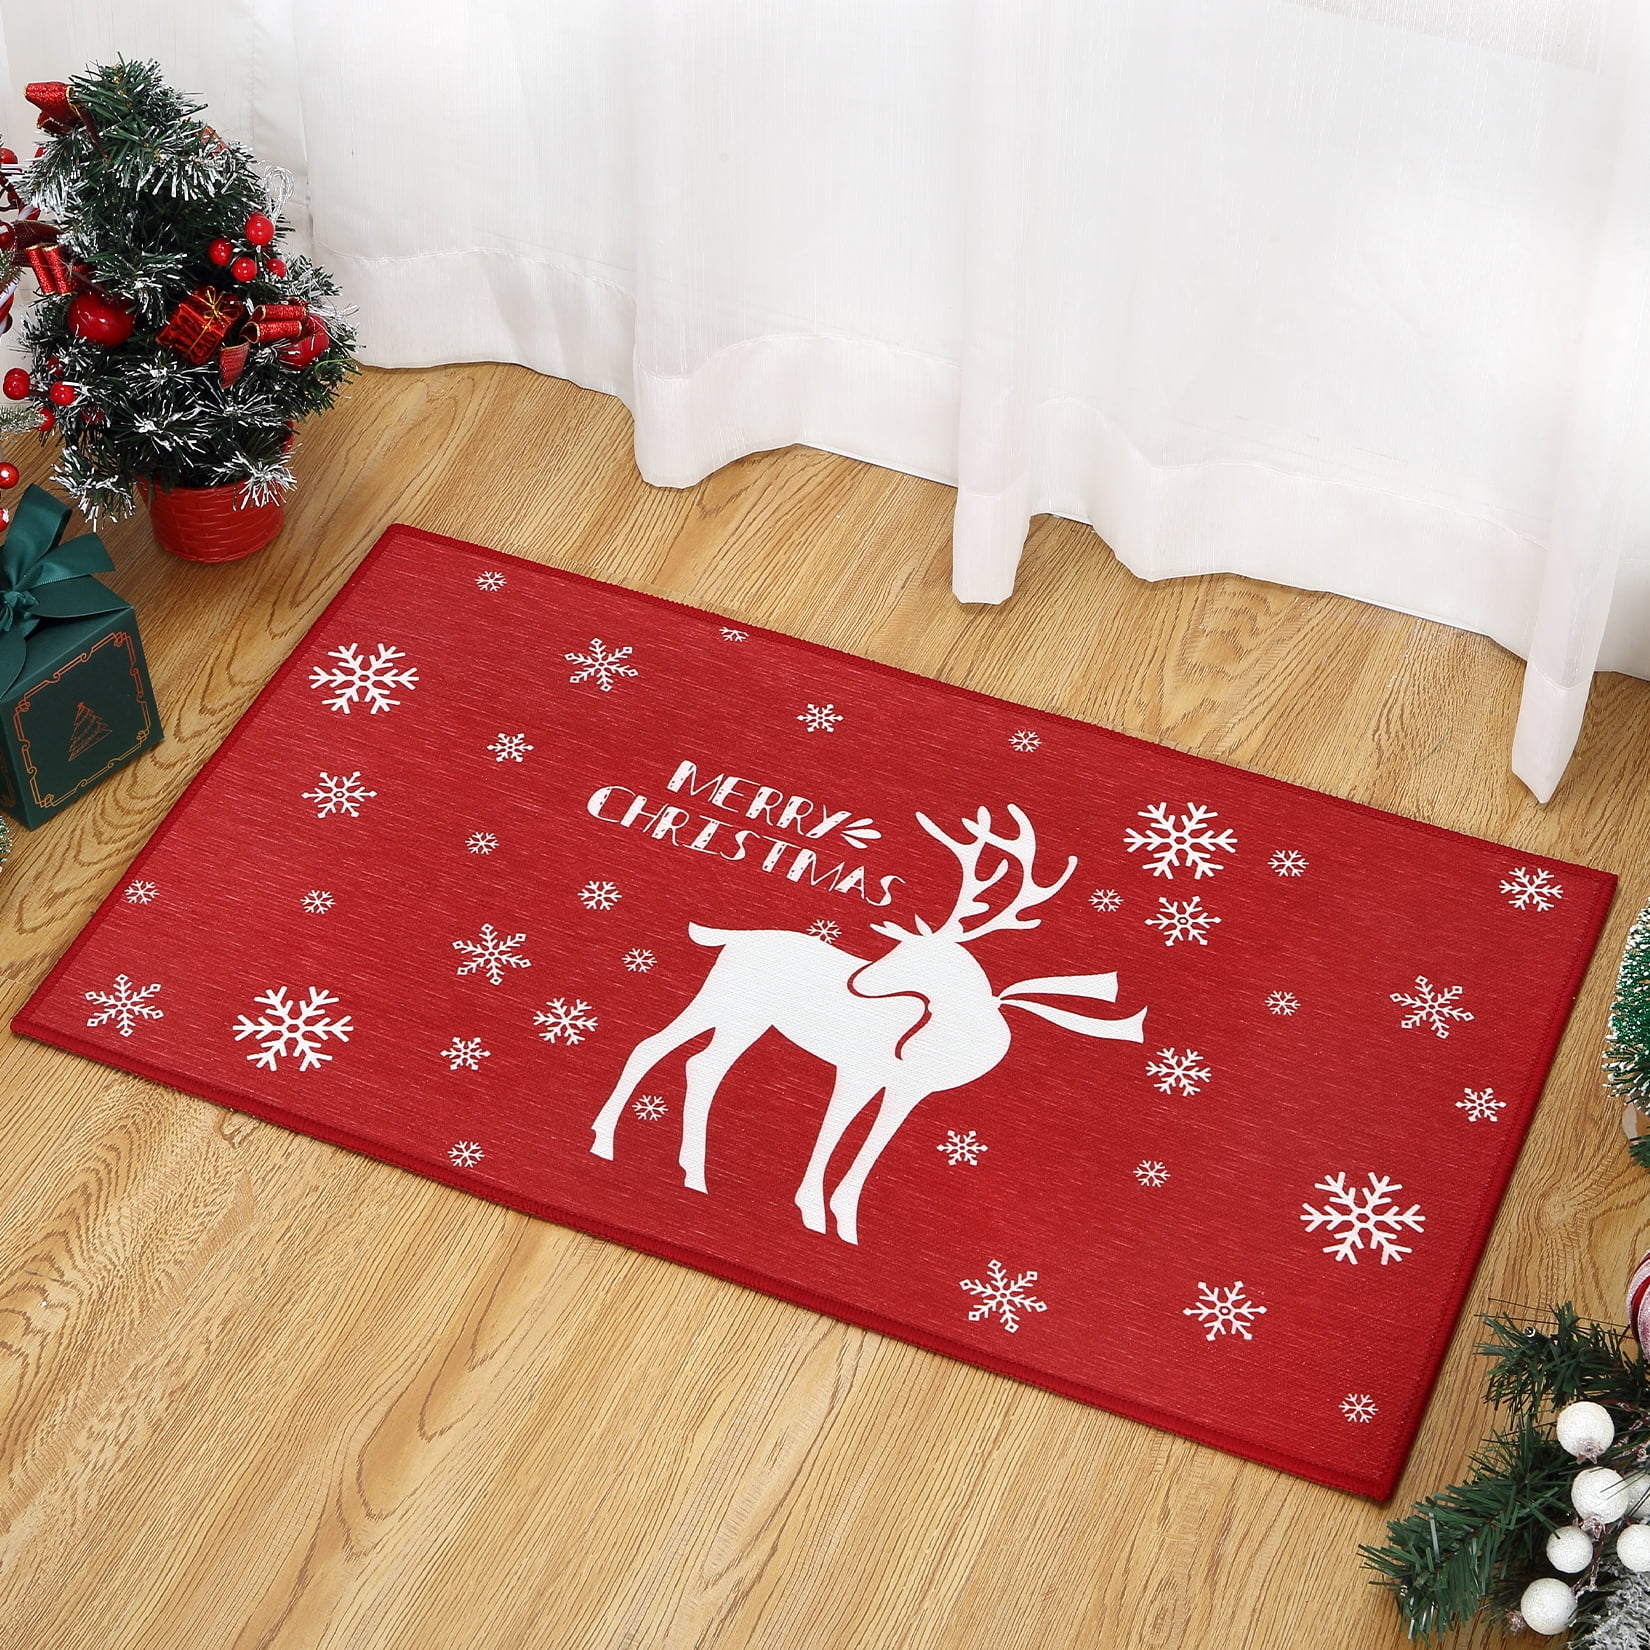 EwdeWwo Christmas Winter Indoor Doormat Welcome Door Mat, 20 x 40  Reindeer Snowy Forest PVC Leather Mat Soft Non-Slip Rubber Backing,  Durable